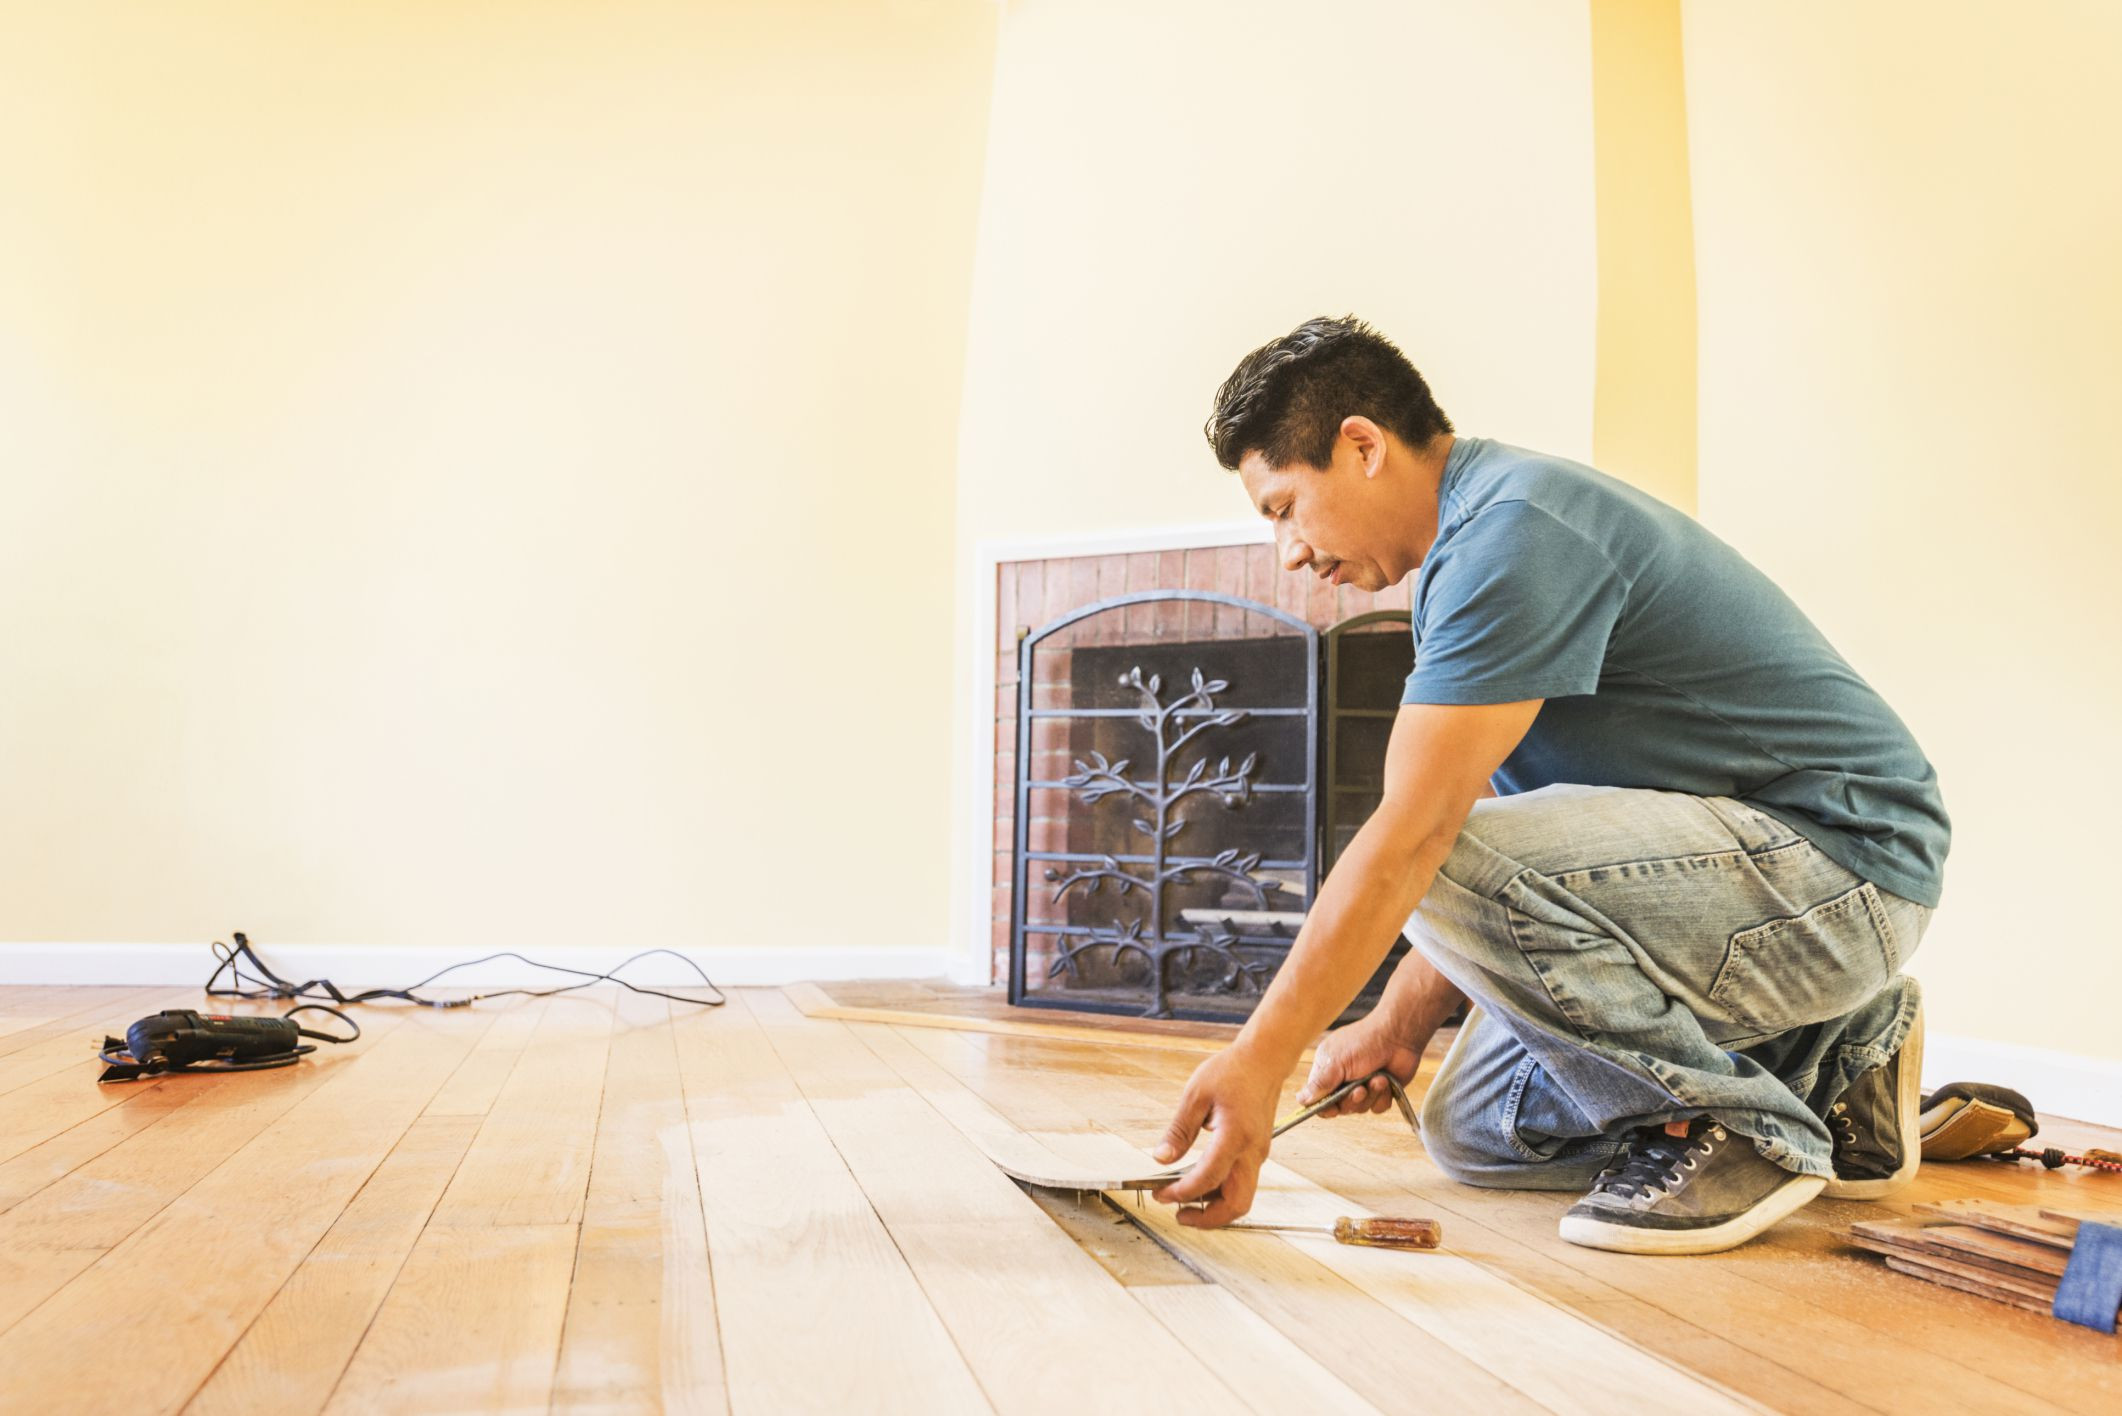 prefinished hardwood flooring ottawa of solid hardwood flooring costs for professional vs diy pertaining to installwoodflooring 592016327 56684d6f3df78ce1610a598a